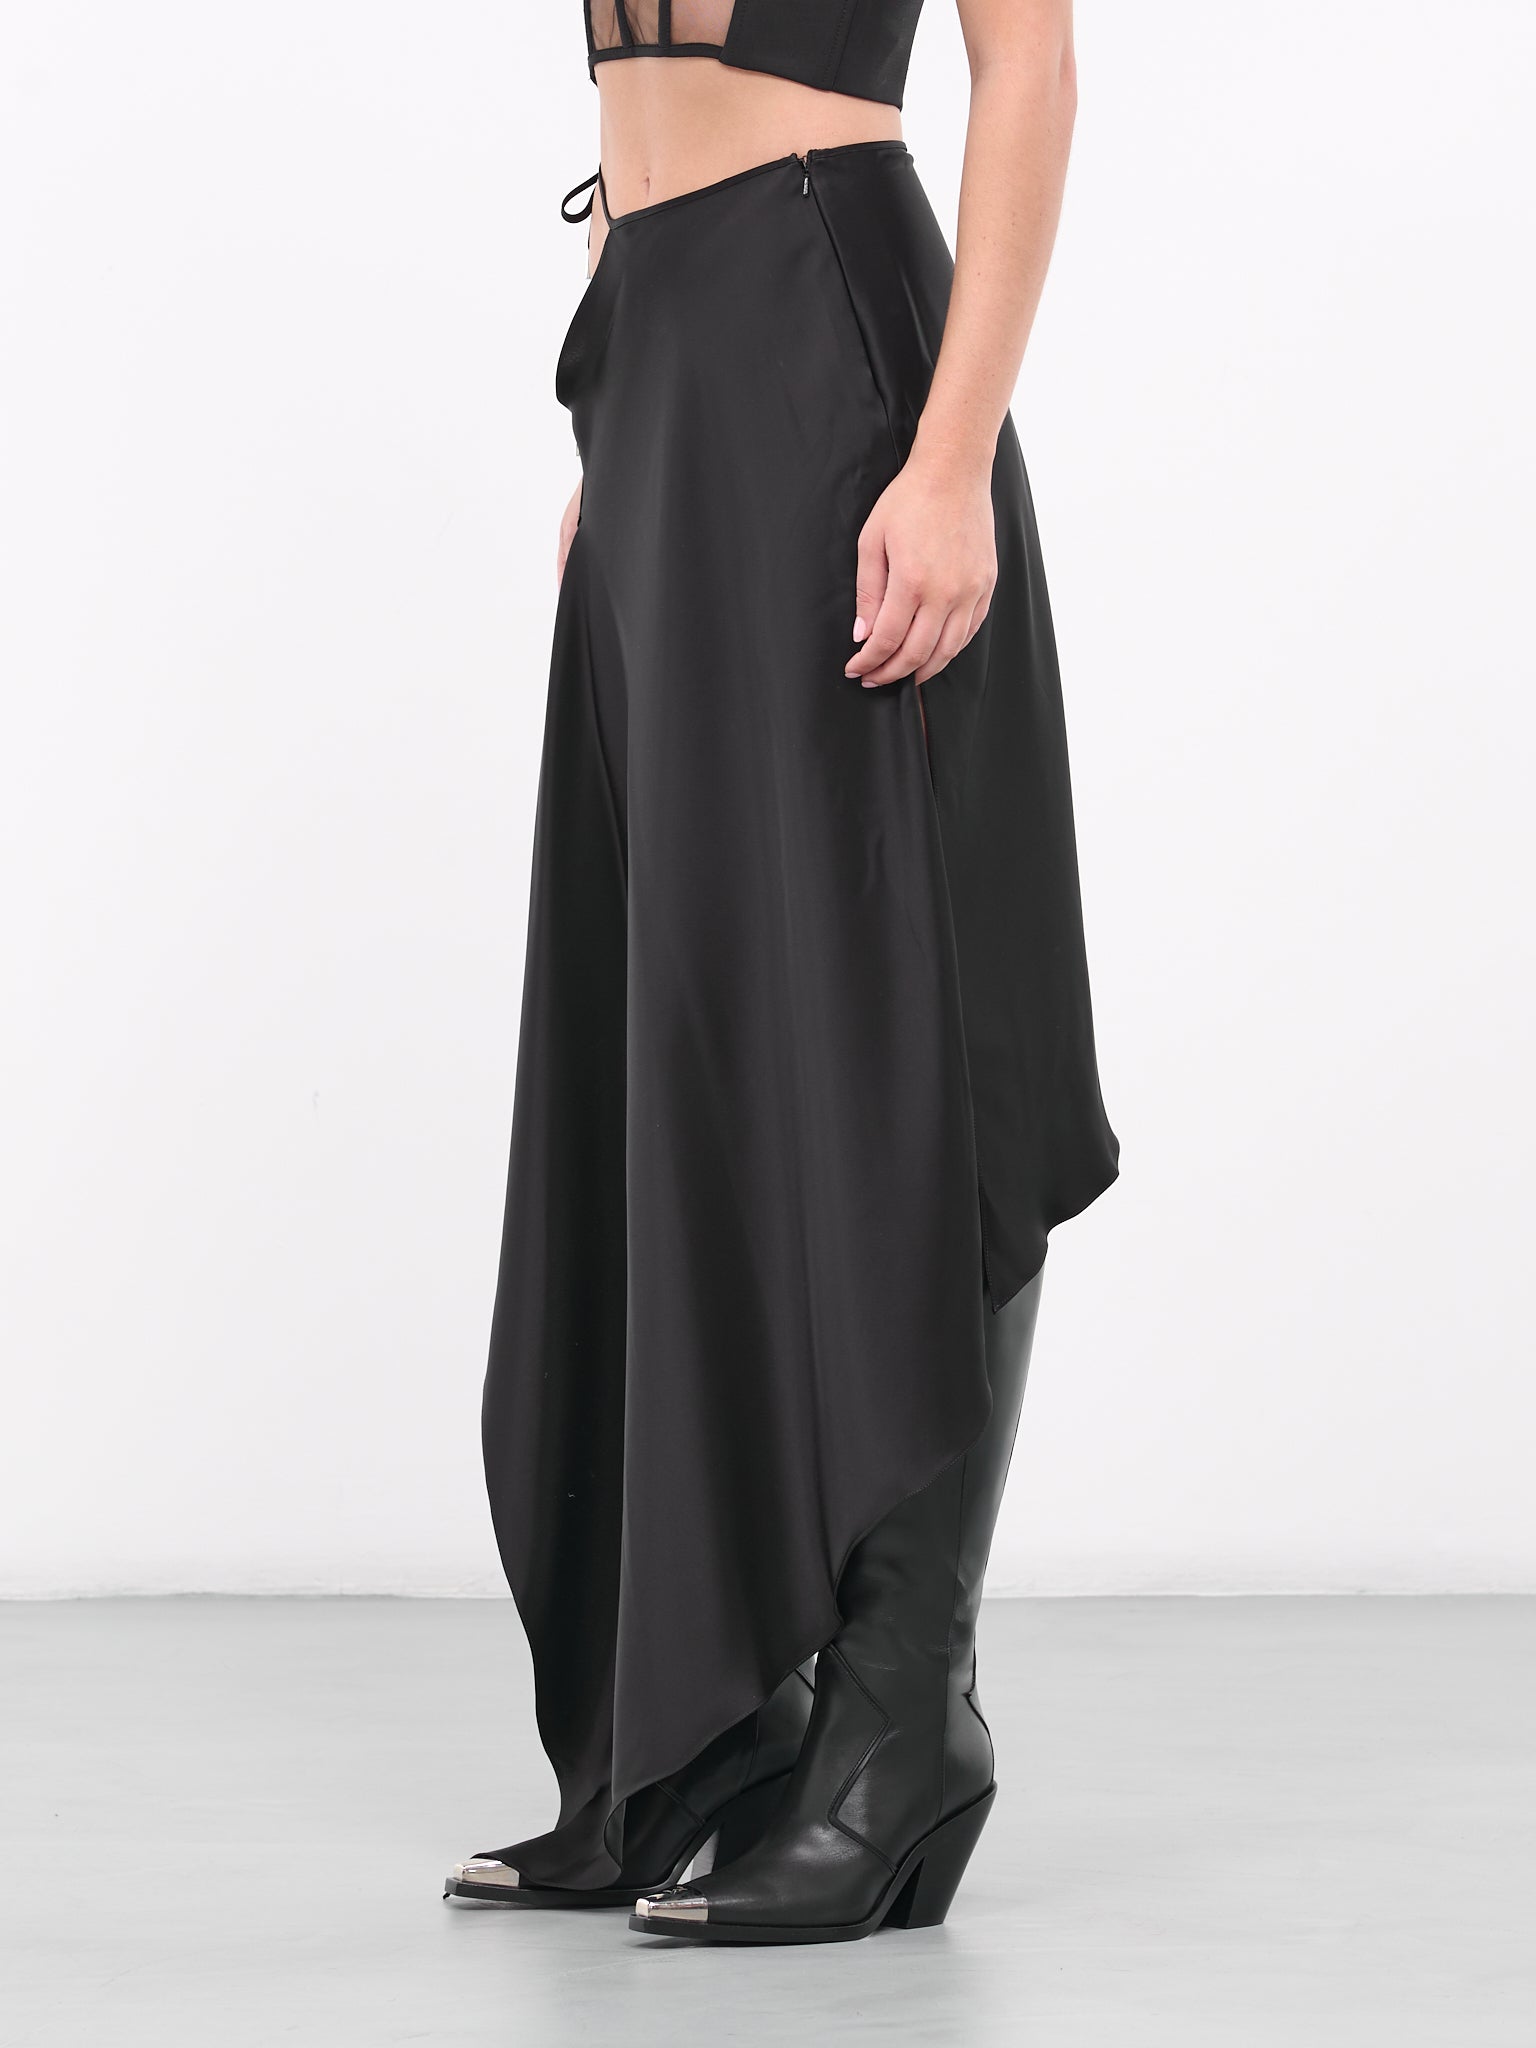 Cut-Out Satin Skirt (DK05S-BLACK)